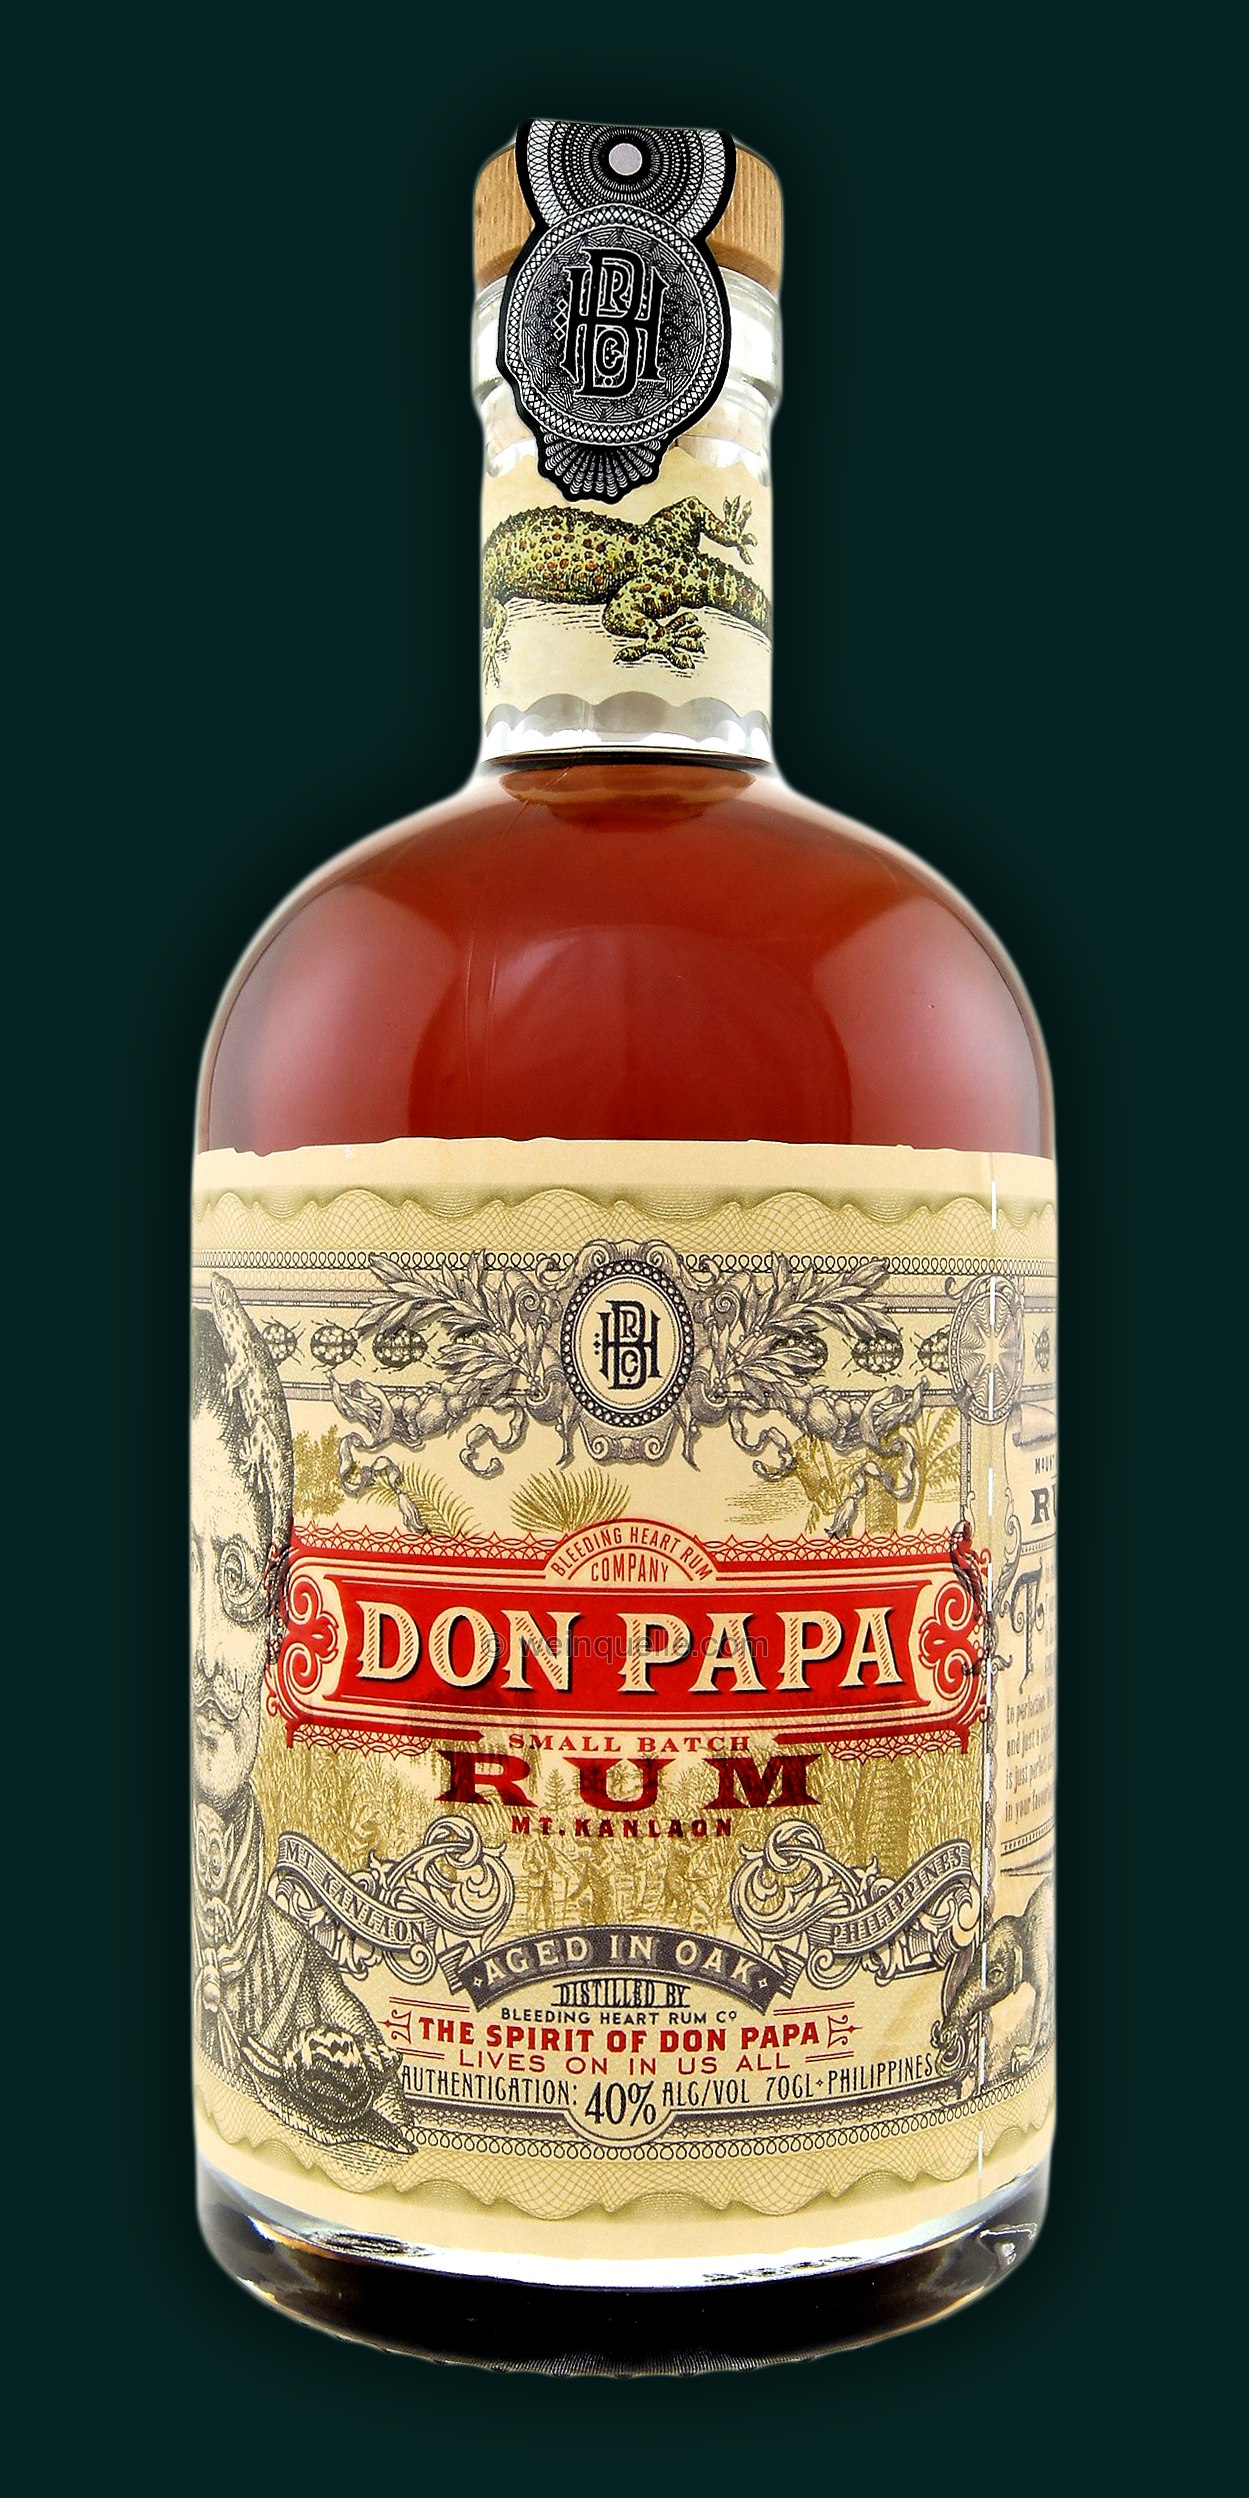 Don papa купить. Don Papa rum. Don Papa Ром этикетка. Ром папа Ром. Дон пара Ром.